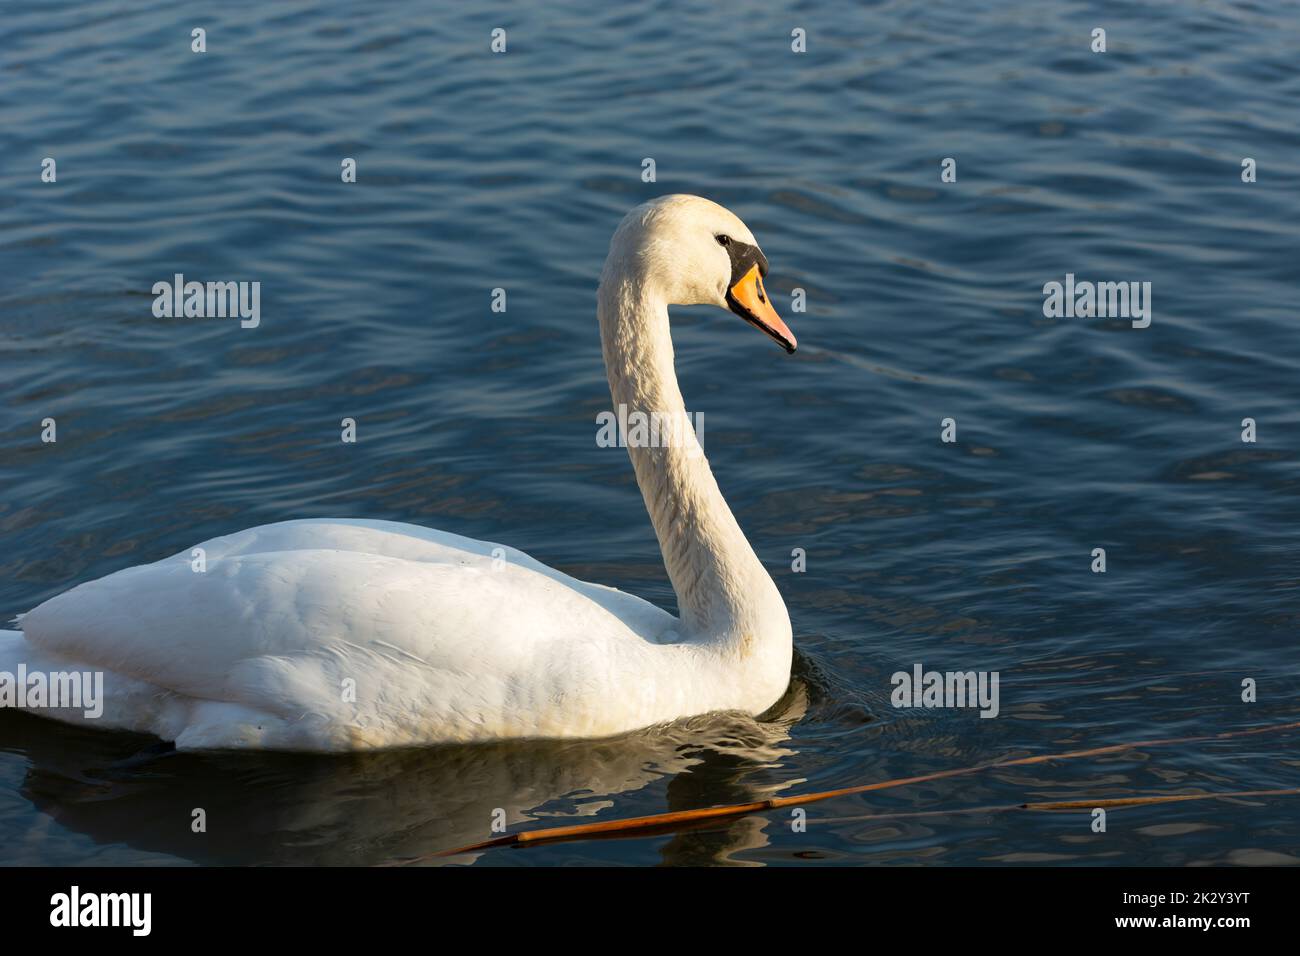 White mute swan swimming in blue water Stock Photo